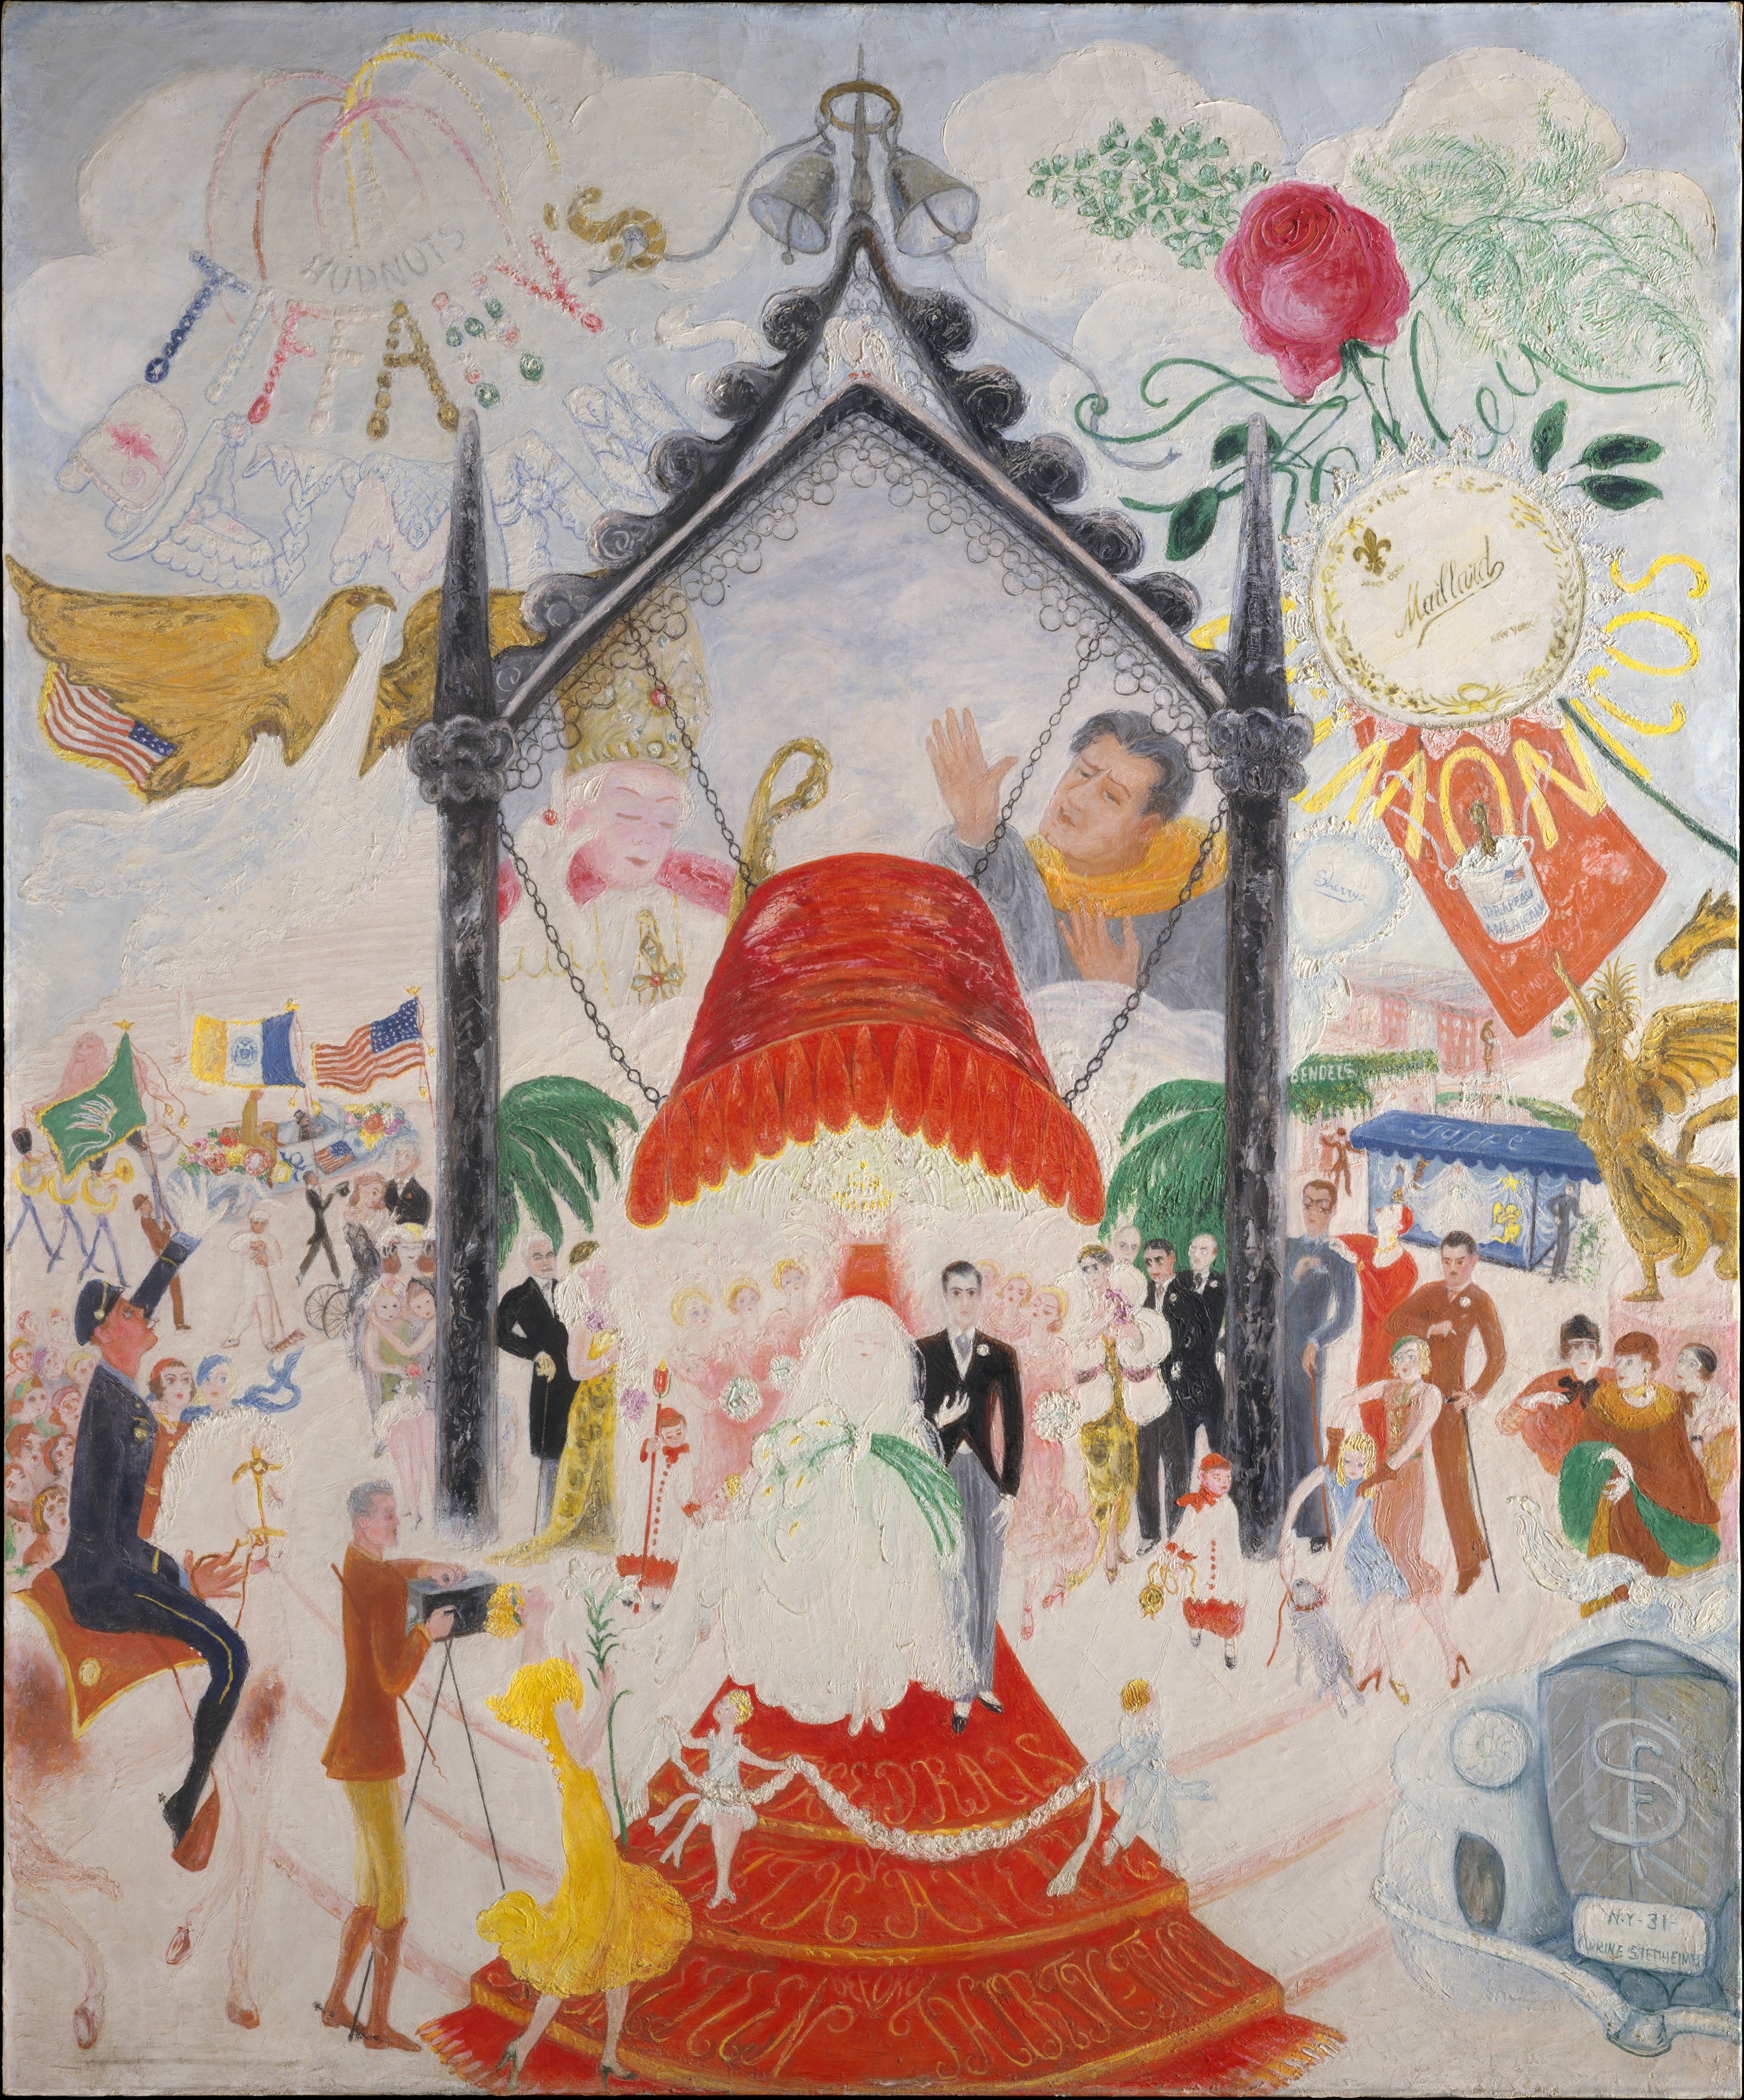 Katedry Piątej Alei by Florine Stettheimer - 1931 - 152,4 x 127 cm 